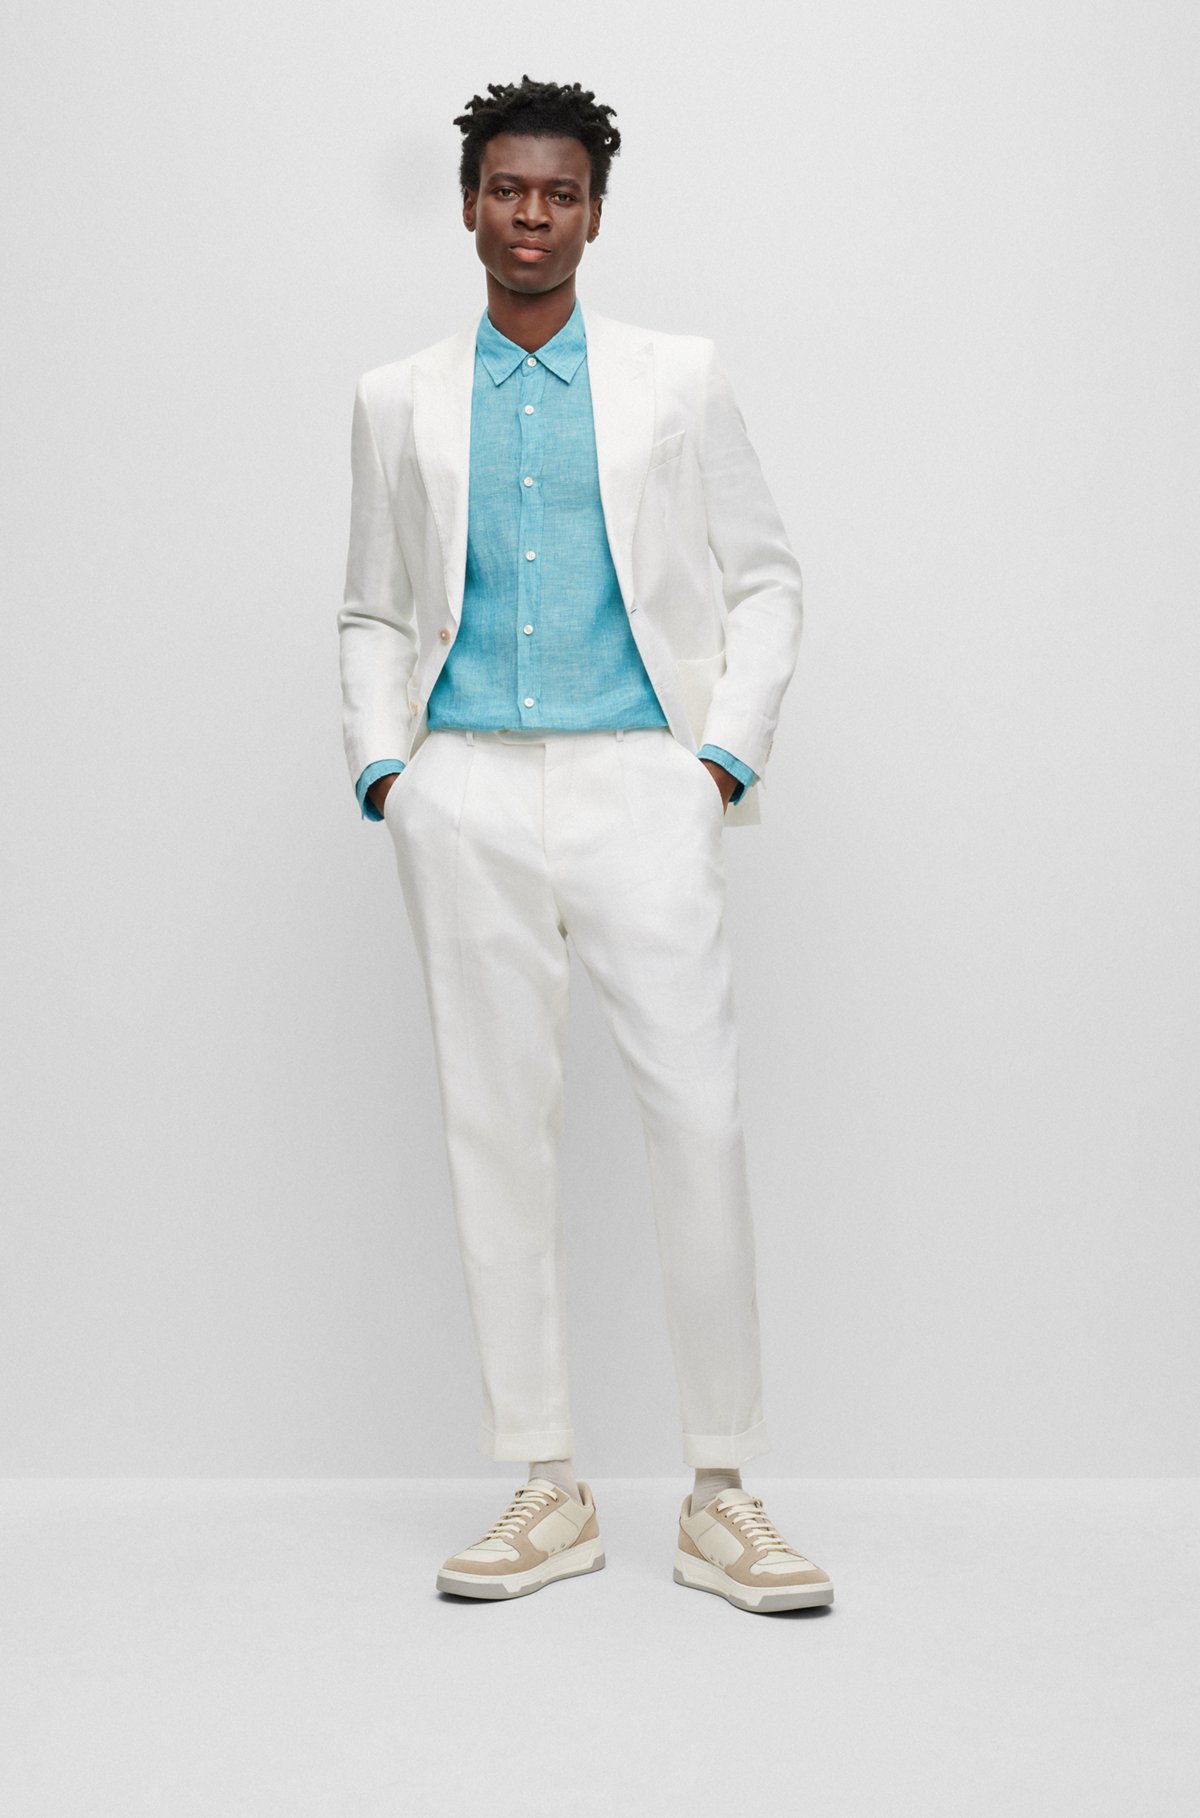 Regular-fit long-sleeved shirt in linen chambray, Light Blue